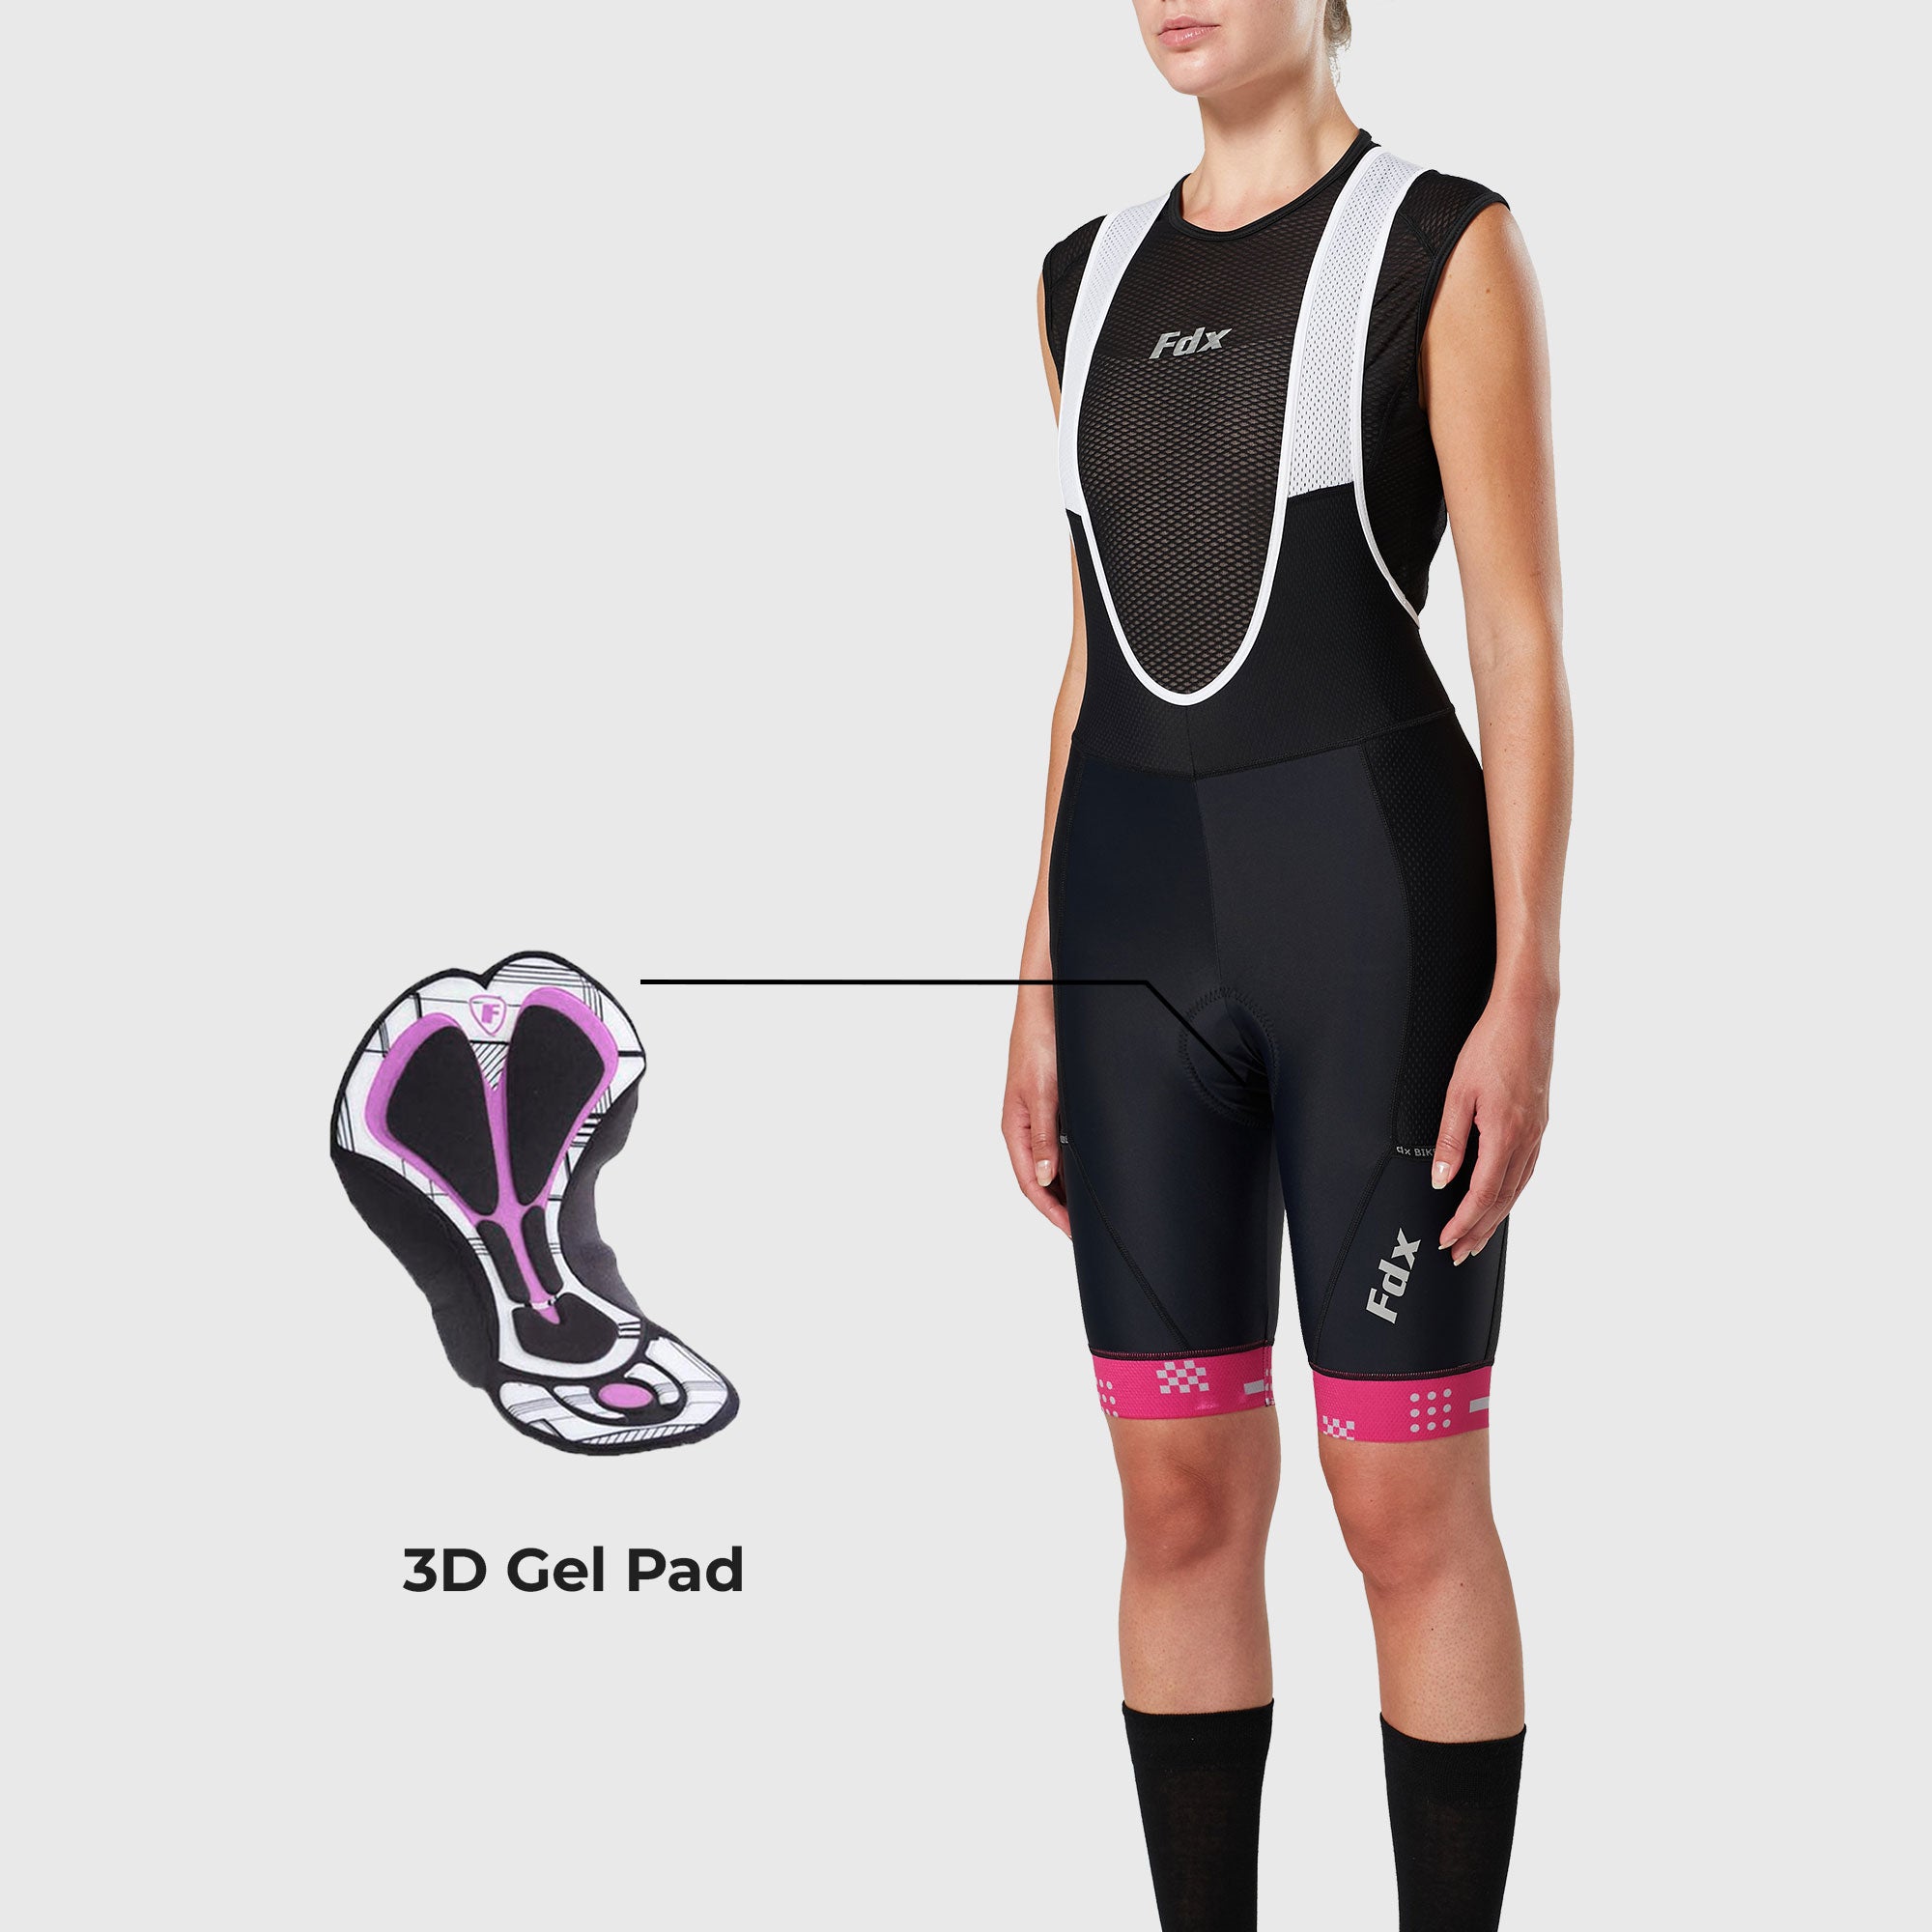 Fdx All Day Pink Women's Padded Summer Cycling Cargo Bib Shorts